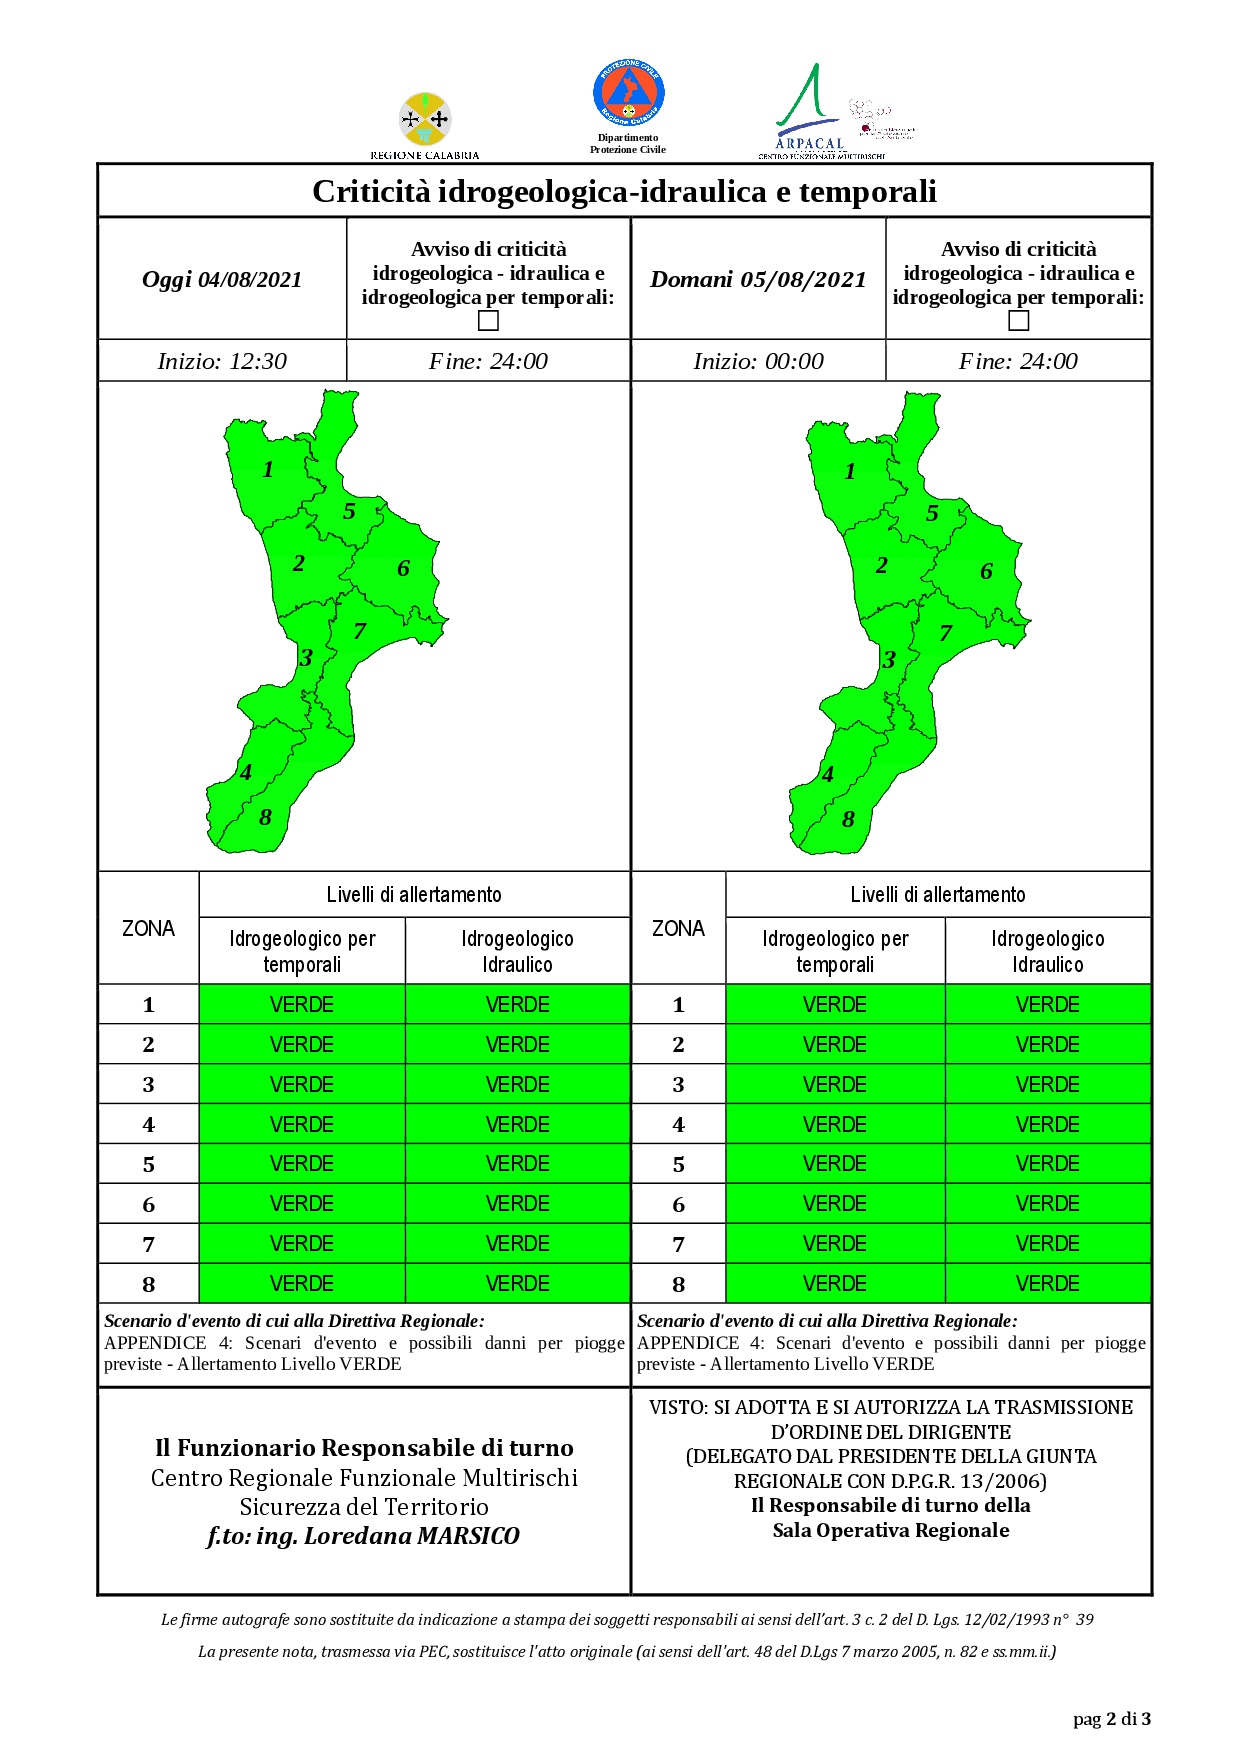 Criticità idrogeologica-idraulica e temporali in Calabria 04-08-2021